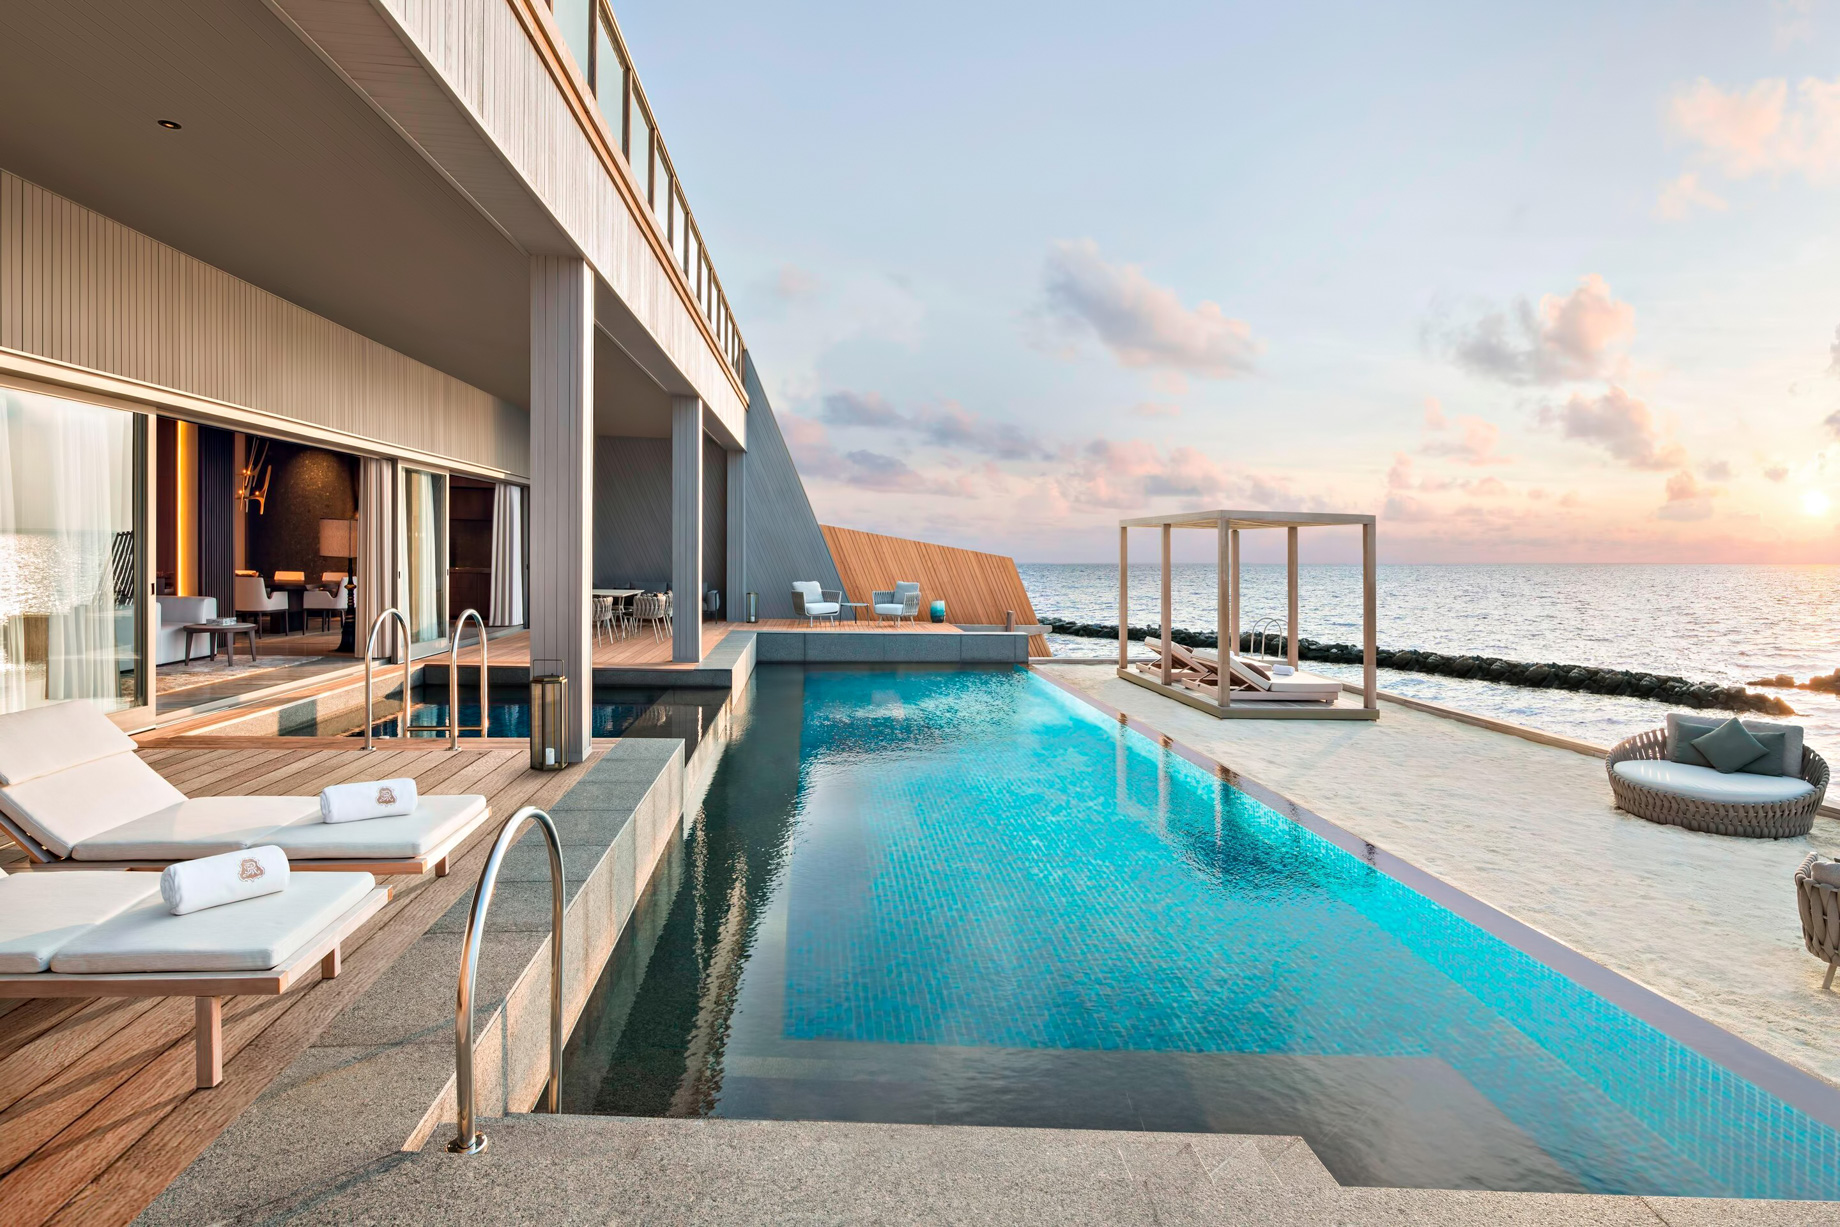 The St. Regis Maldives Vommuli Resort – Dhaalu Atoll, Maldives – John Jacob Astor Estate Pool Terrace